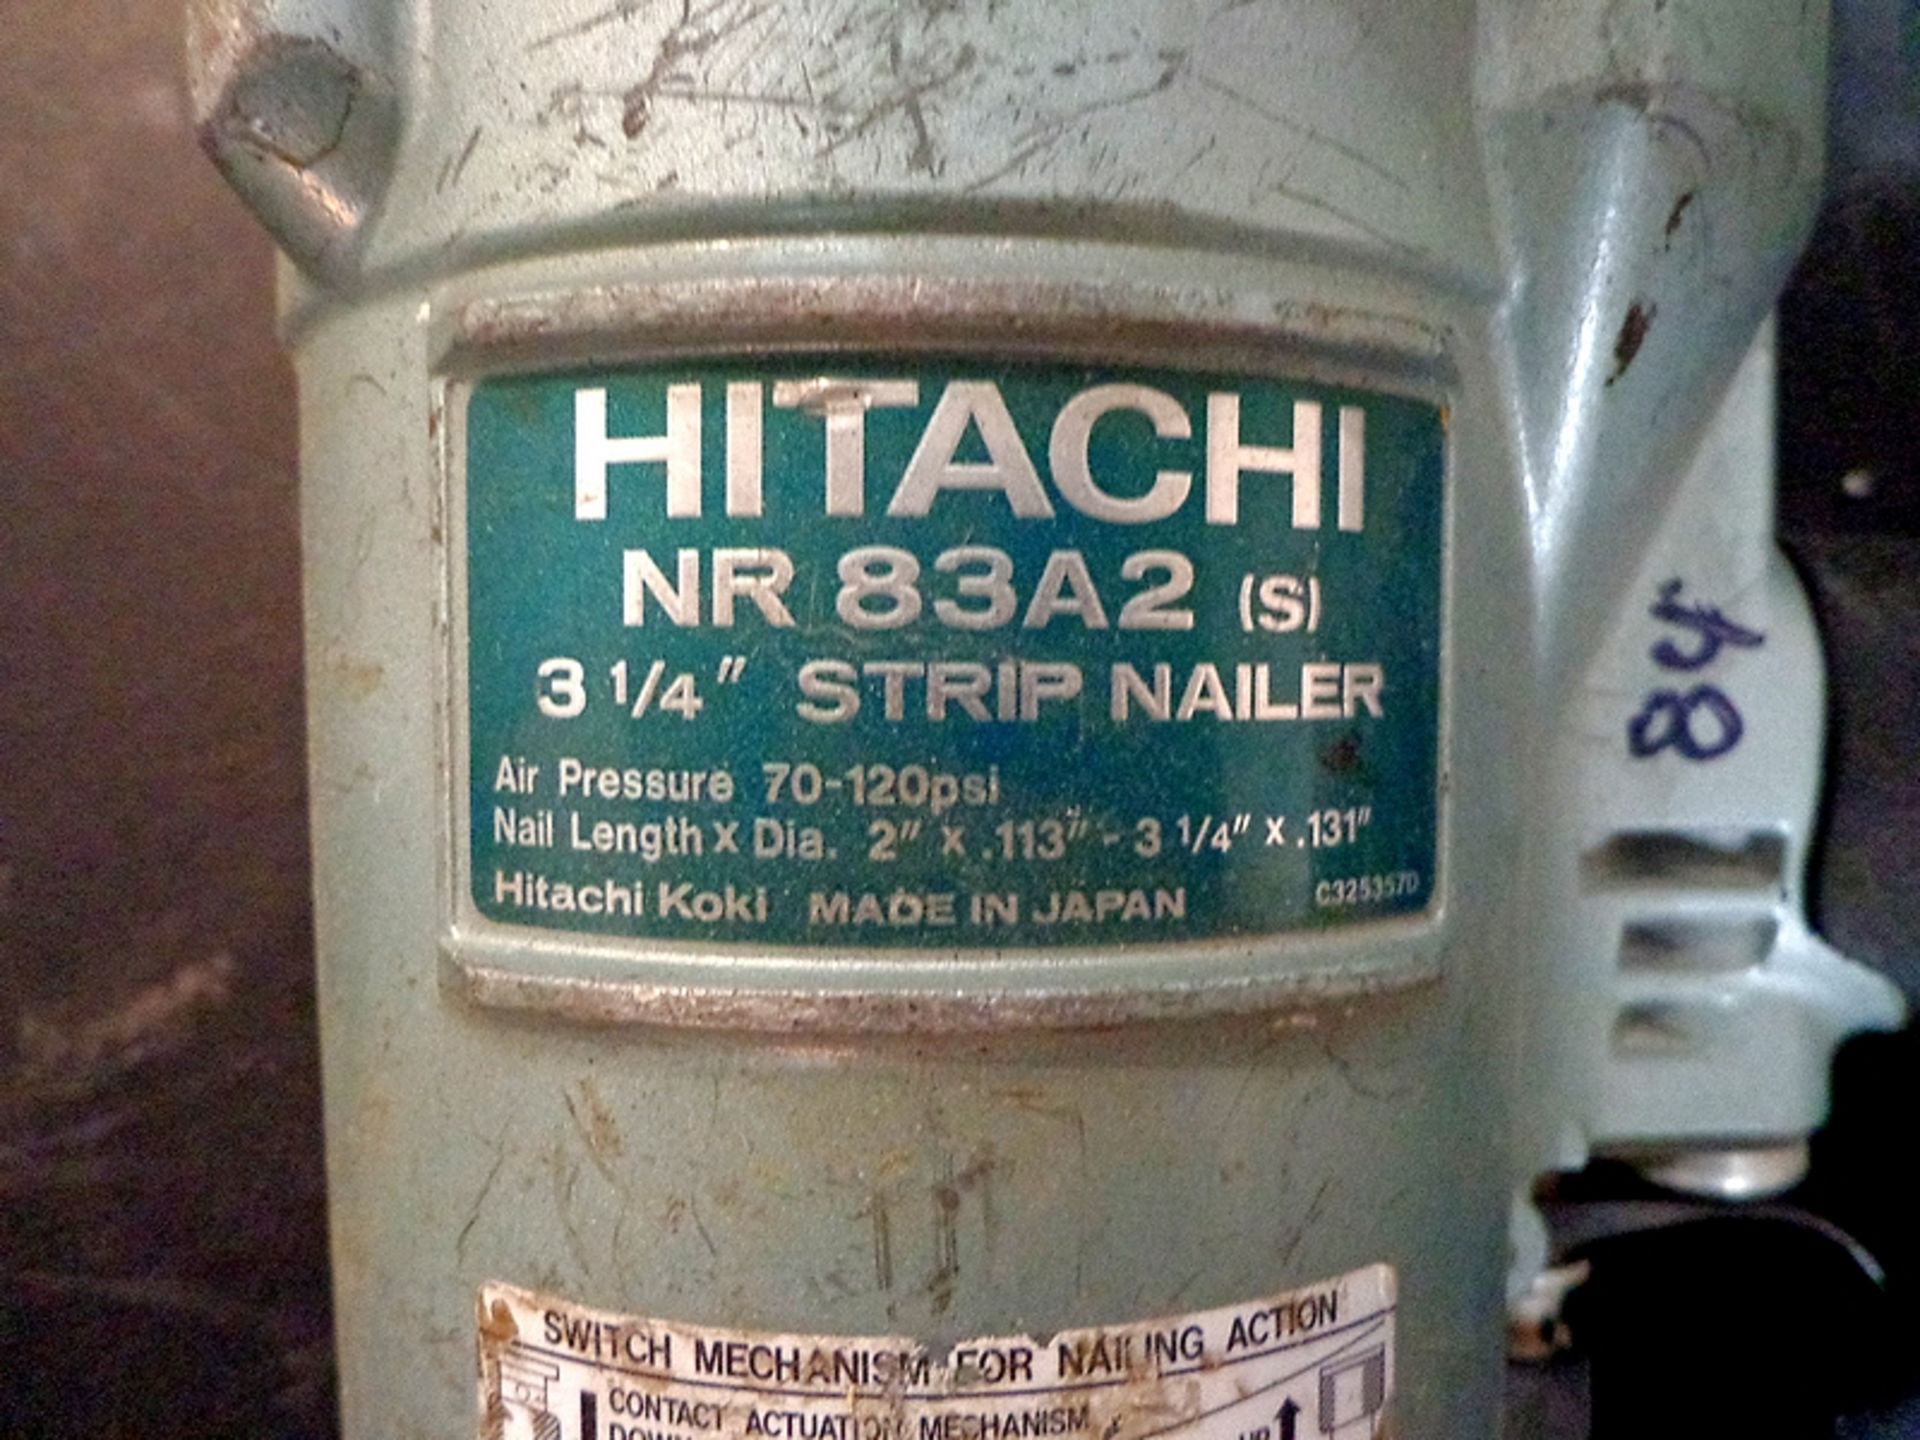 HITACHI NR 83A2 (S) 3 1/4" STRIP NAILER, AIR PRESSURE 70-120 PSI - Image 2 of 2